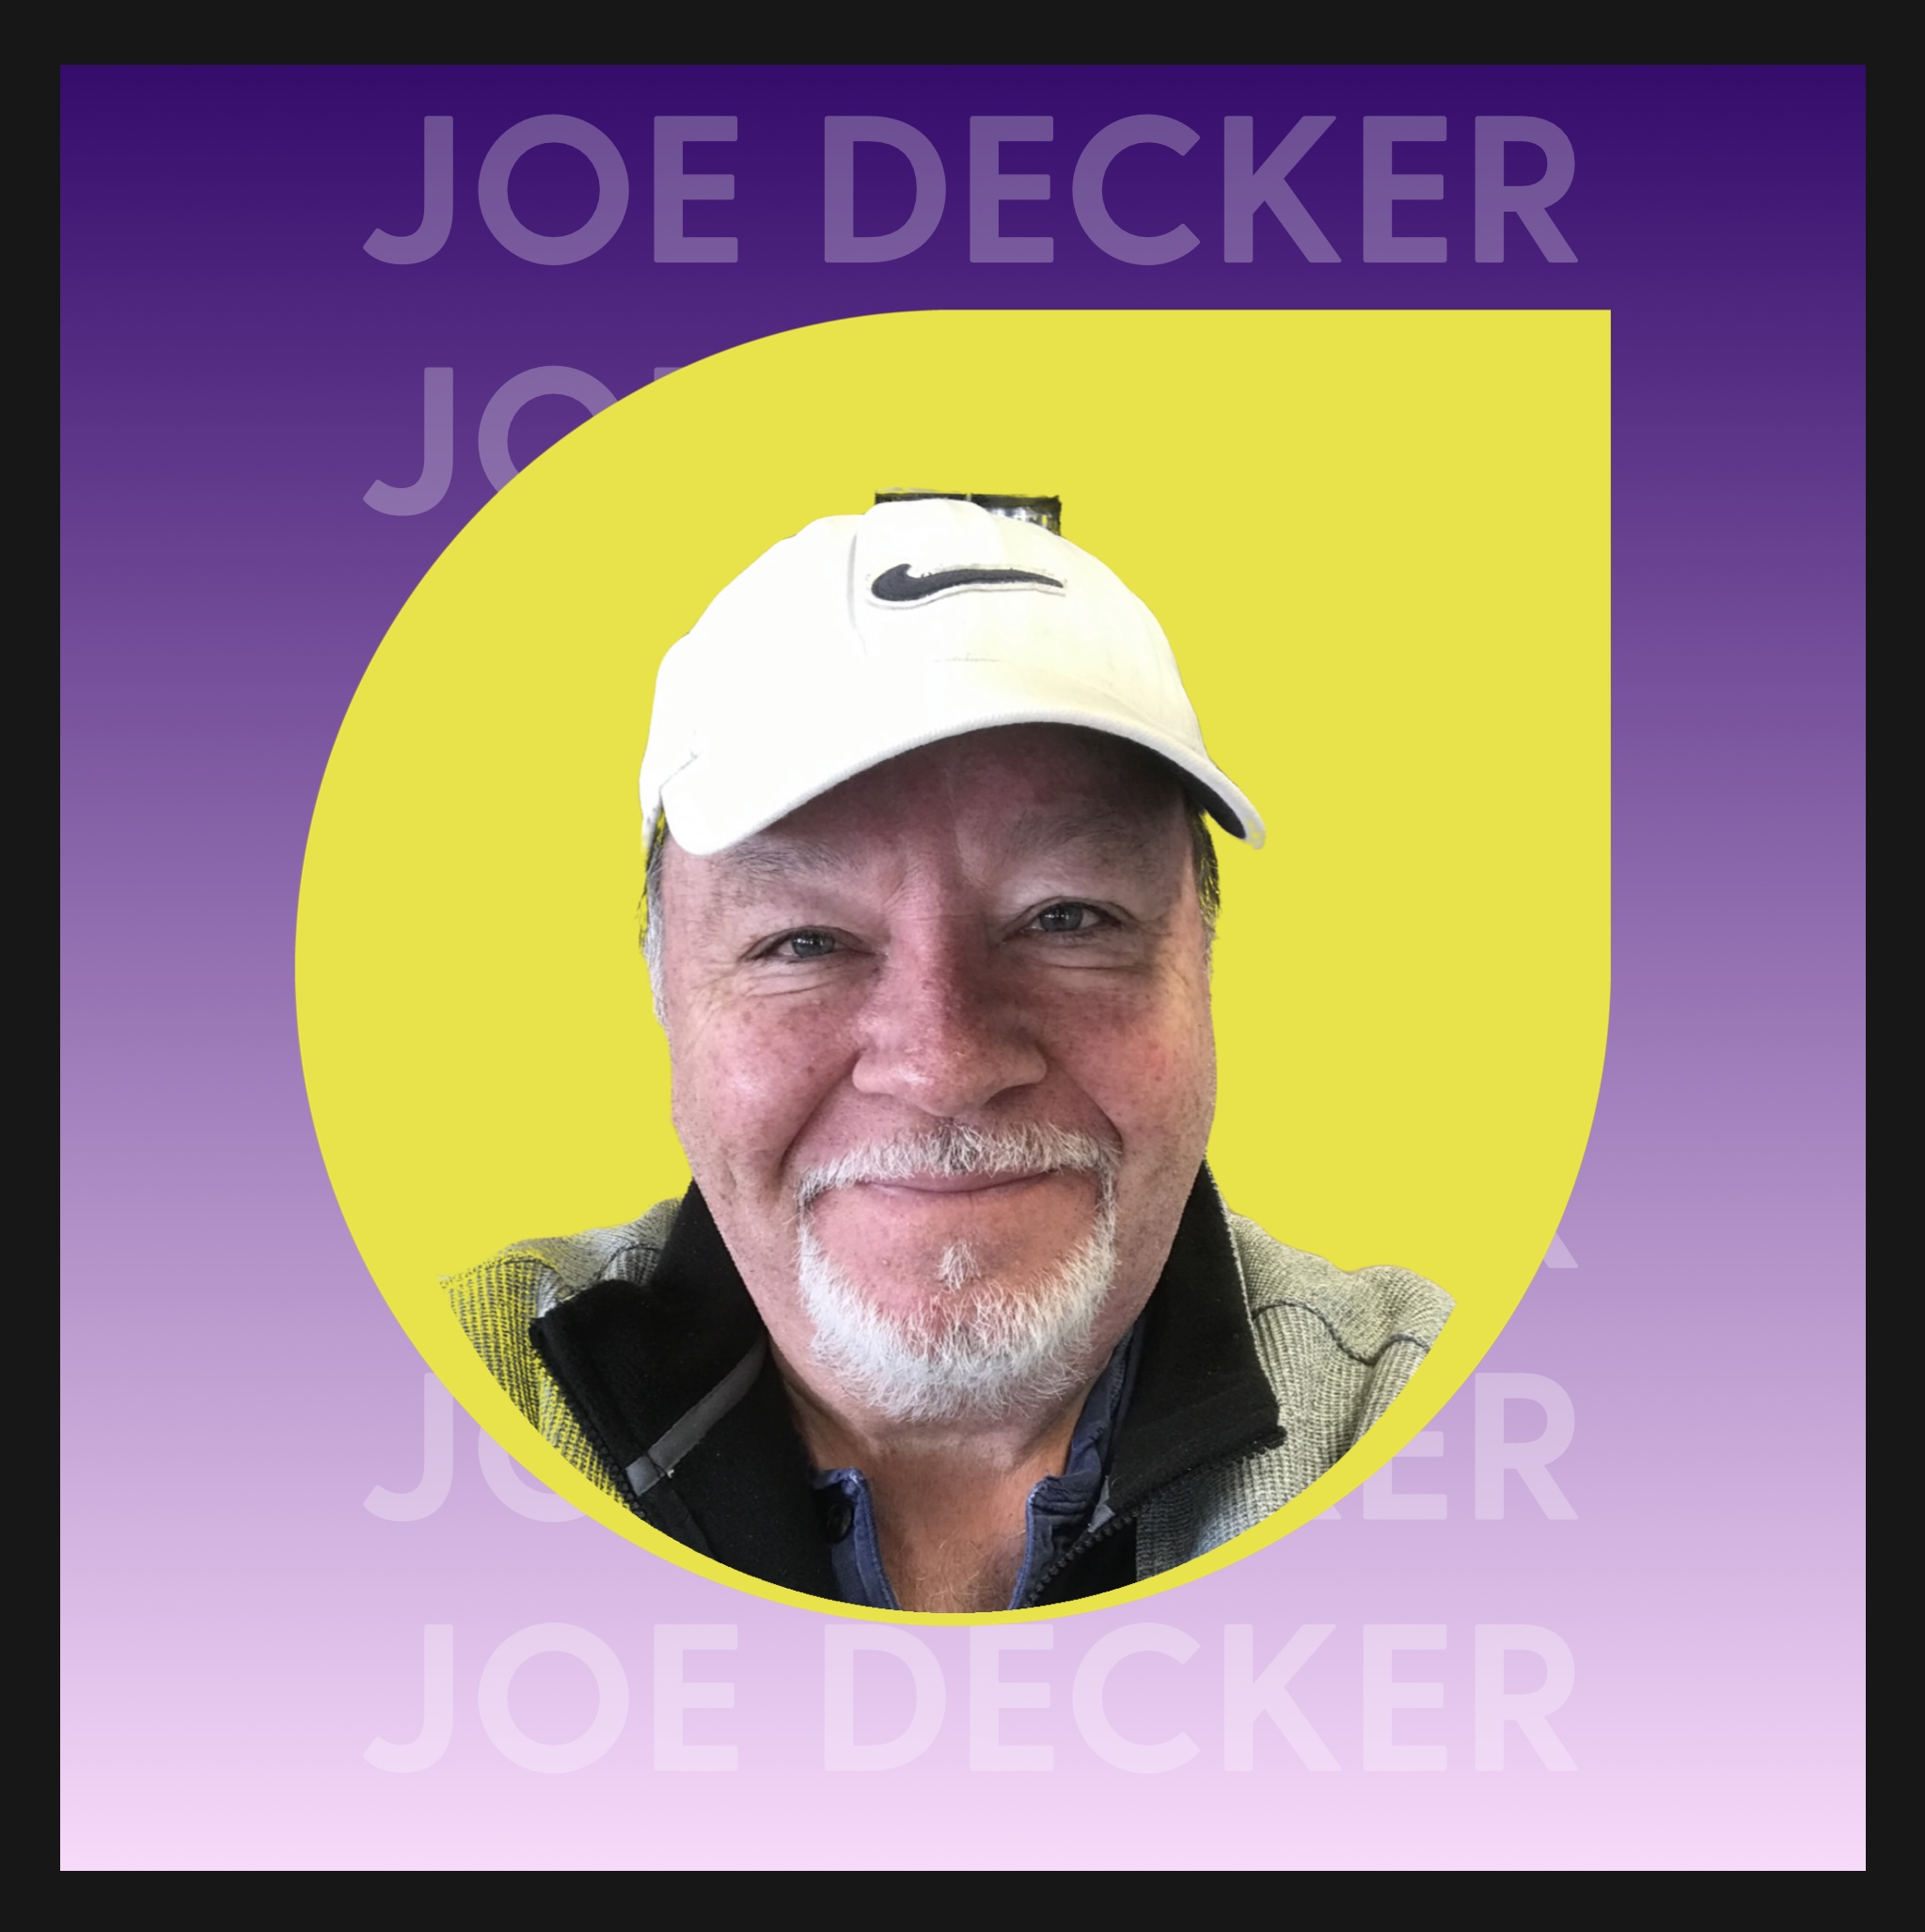 Joe Decker, Owner